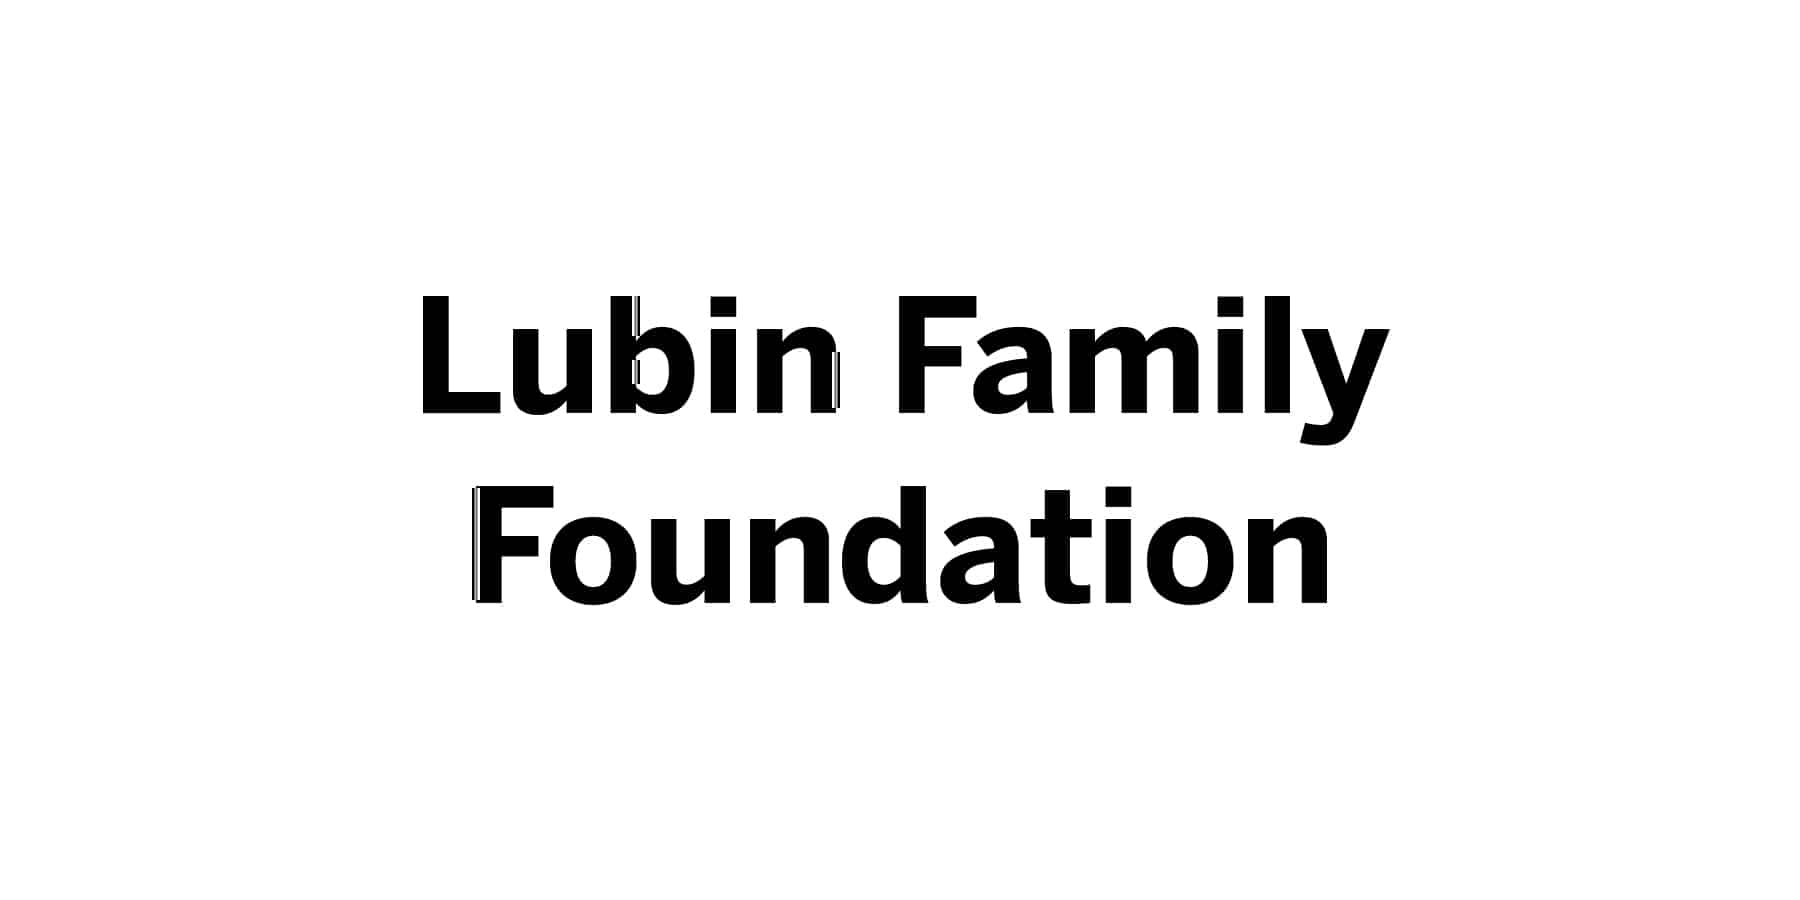 P11-Foundations-lubinfamily